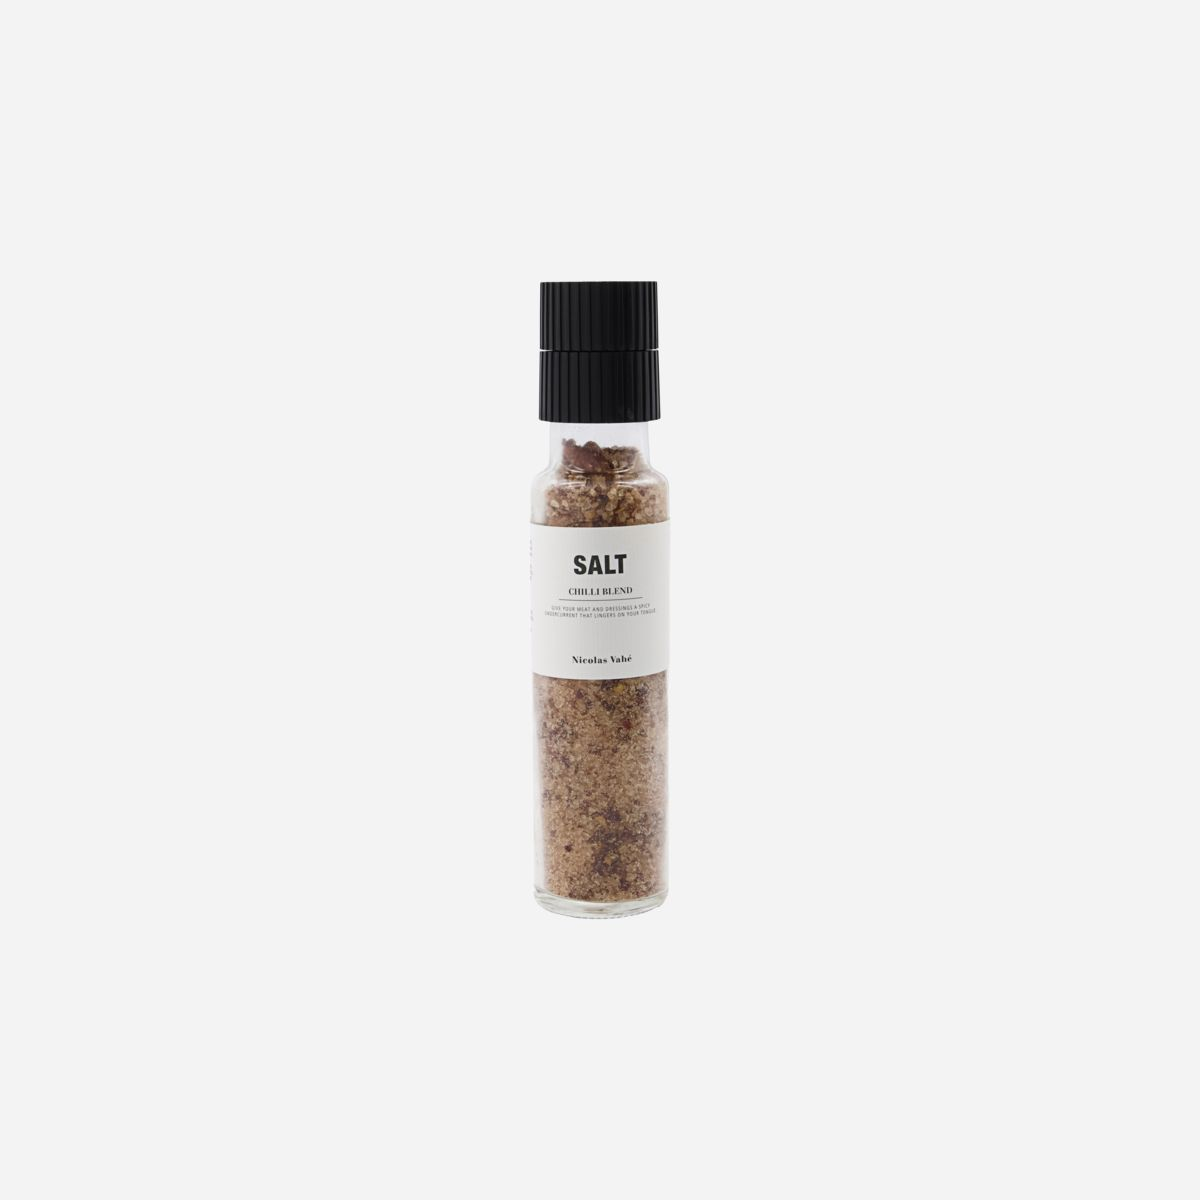 Se Nicolas Vahé - Salt, Chilli blend hos Rikki Tikki Shop